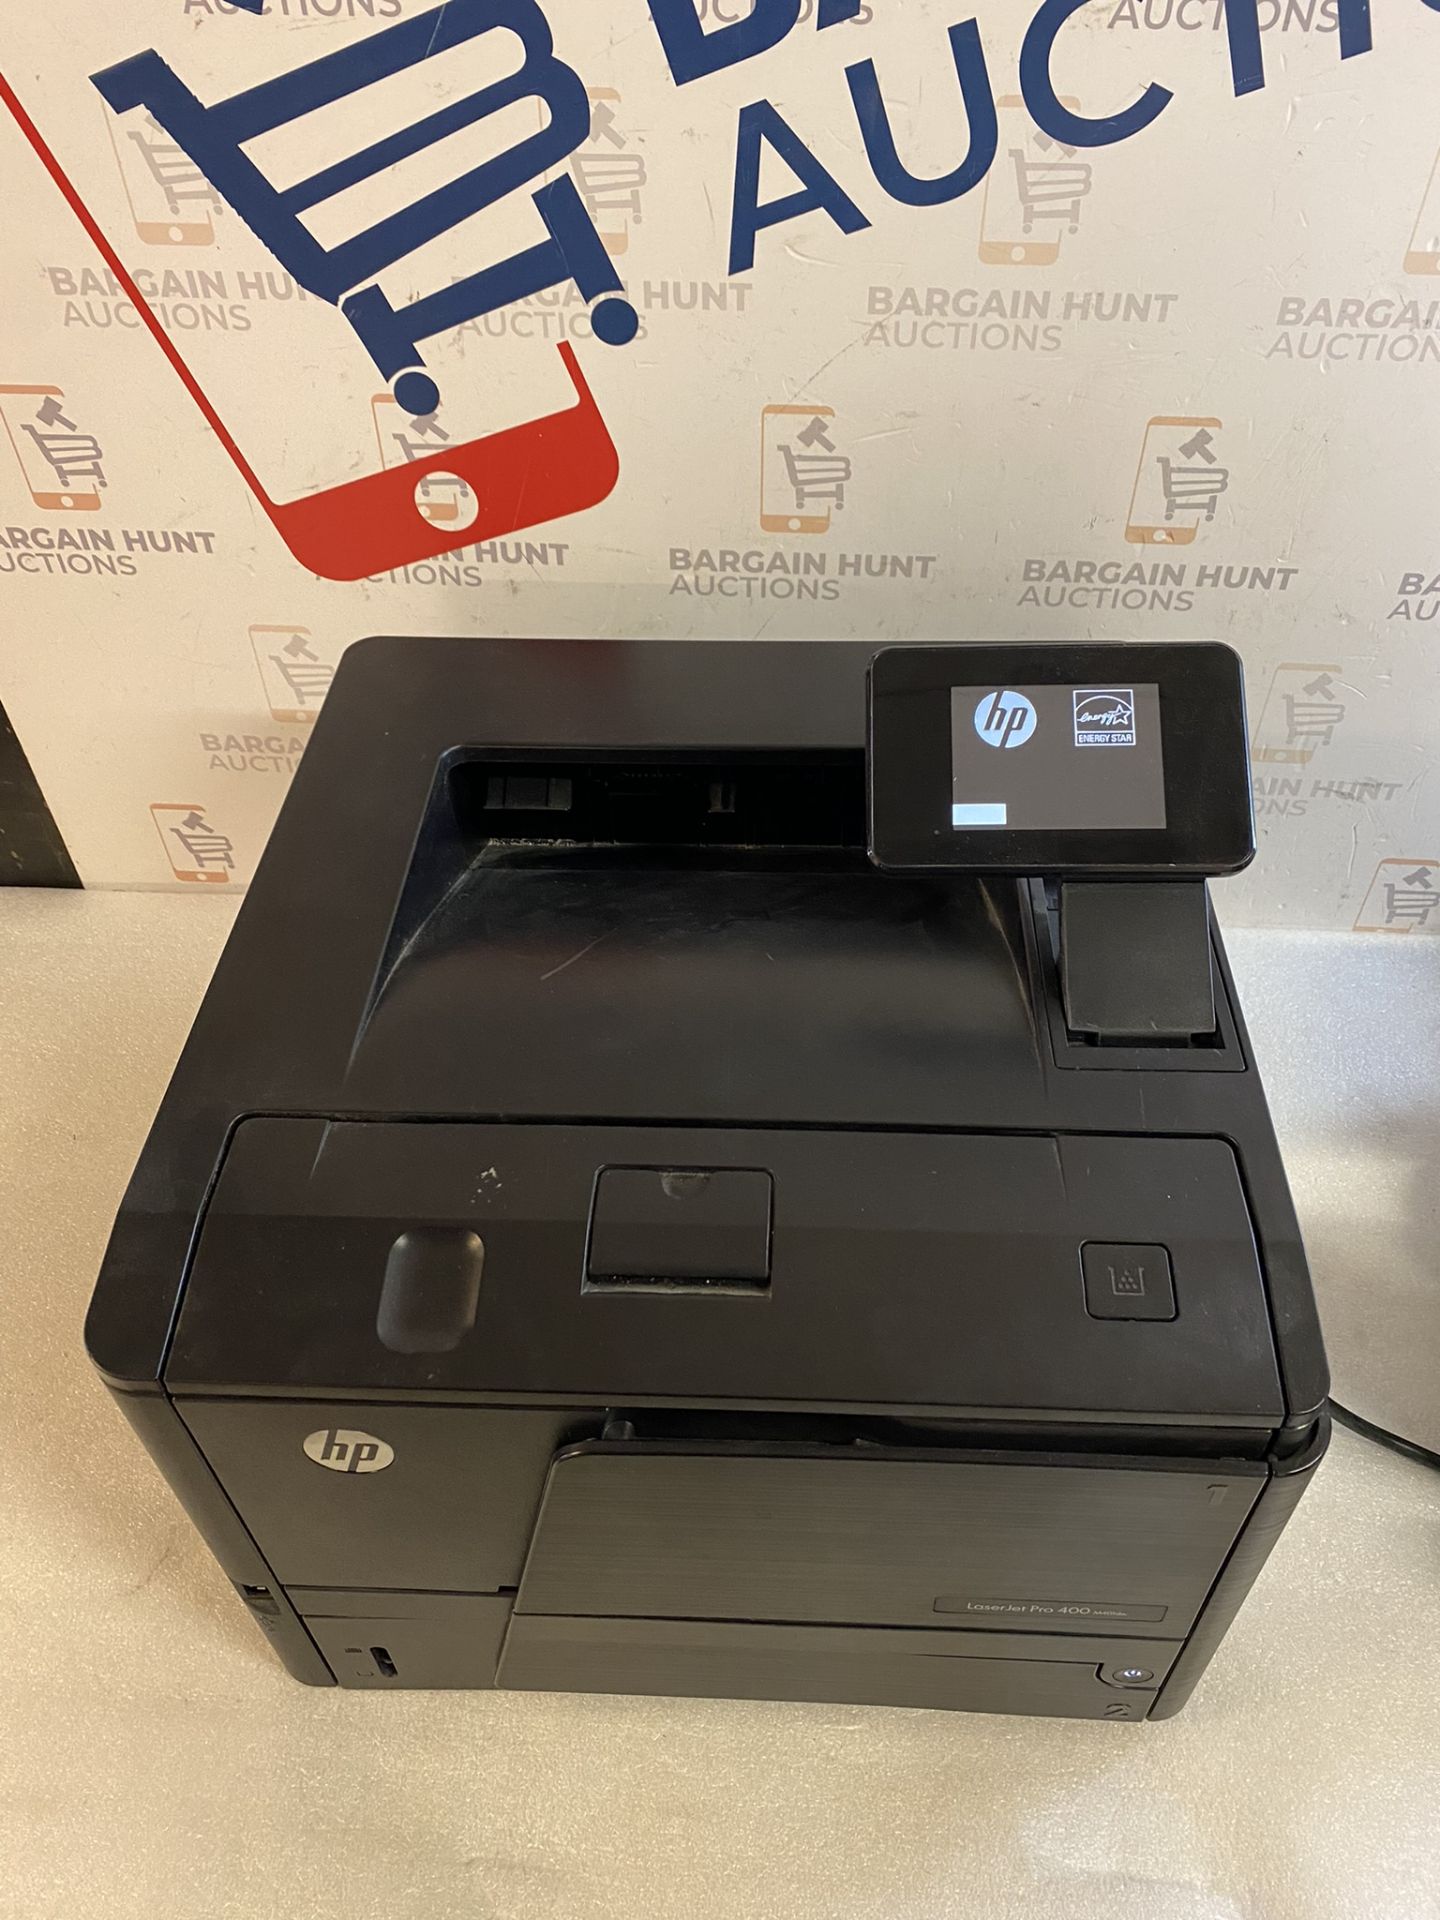 HP Laserjet Pro 400 M401dn Printer (paper jam error, see image)